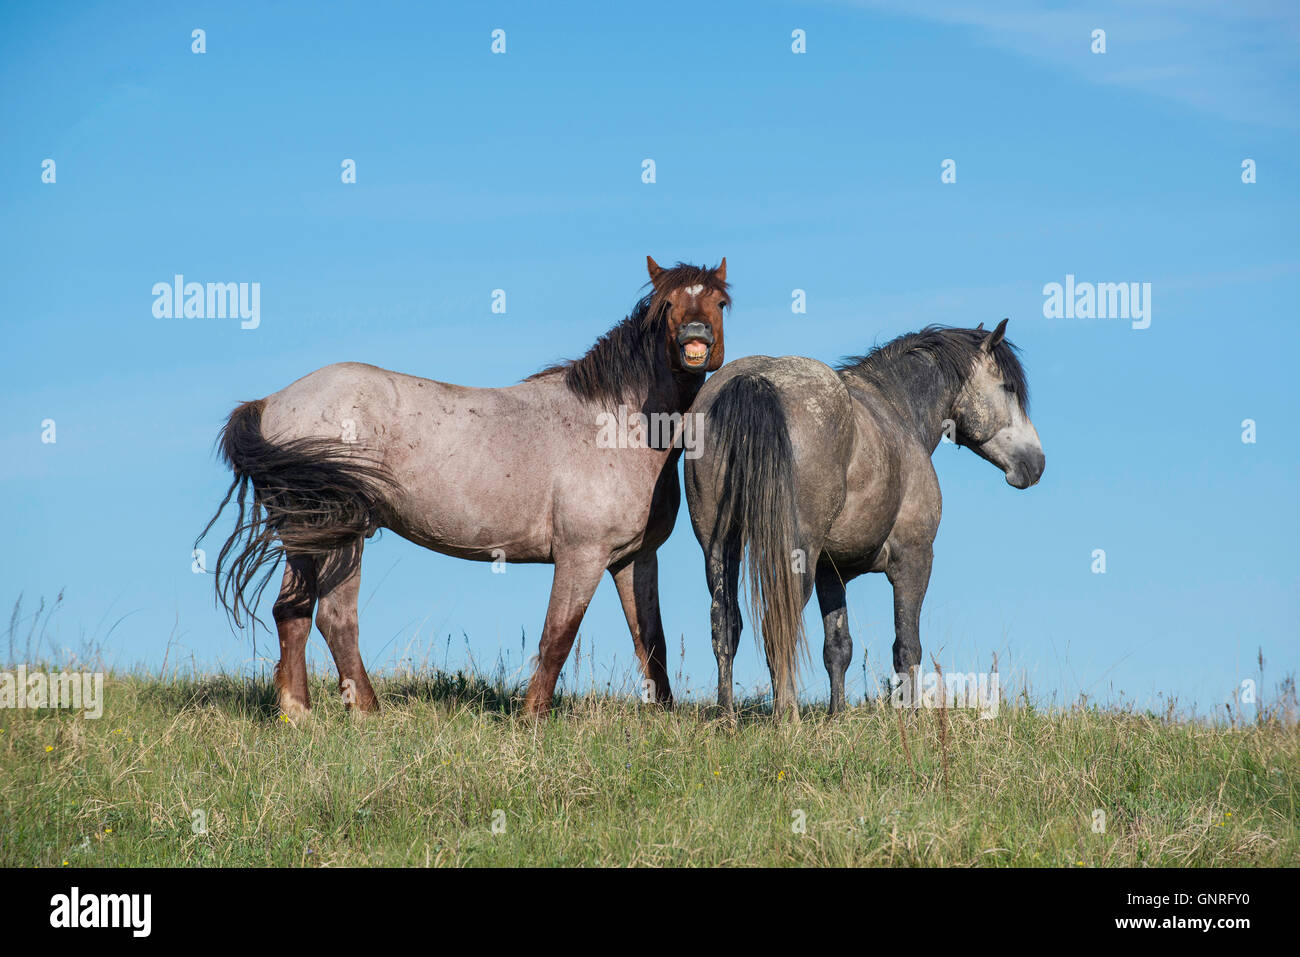 Pair of Wild Horses (Equs ferus), Mustang, Feral, braying,Theodore Roosevelt National Park, North Dakota, Western NA Stock Photo